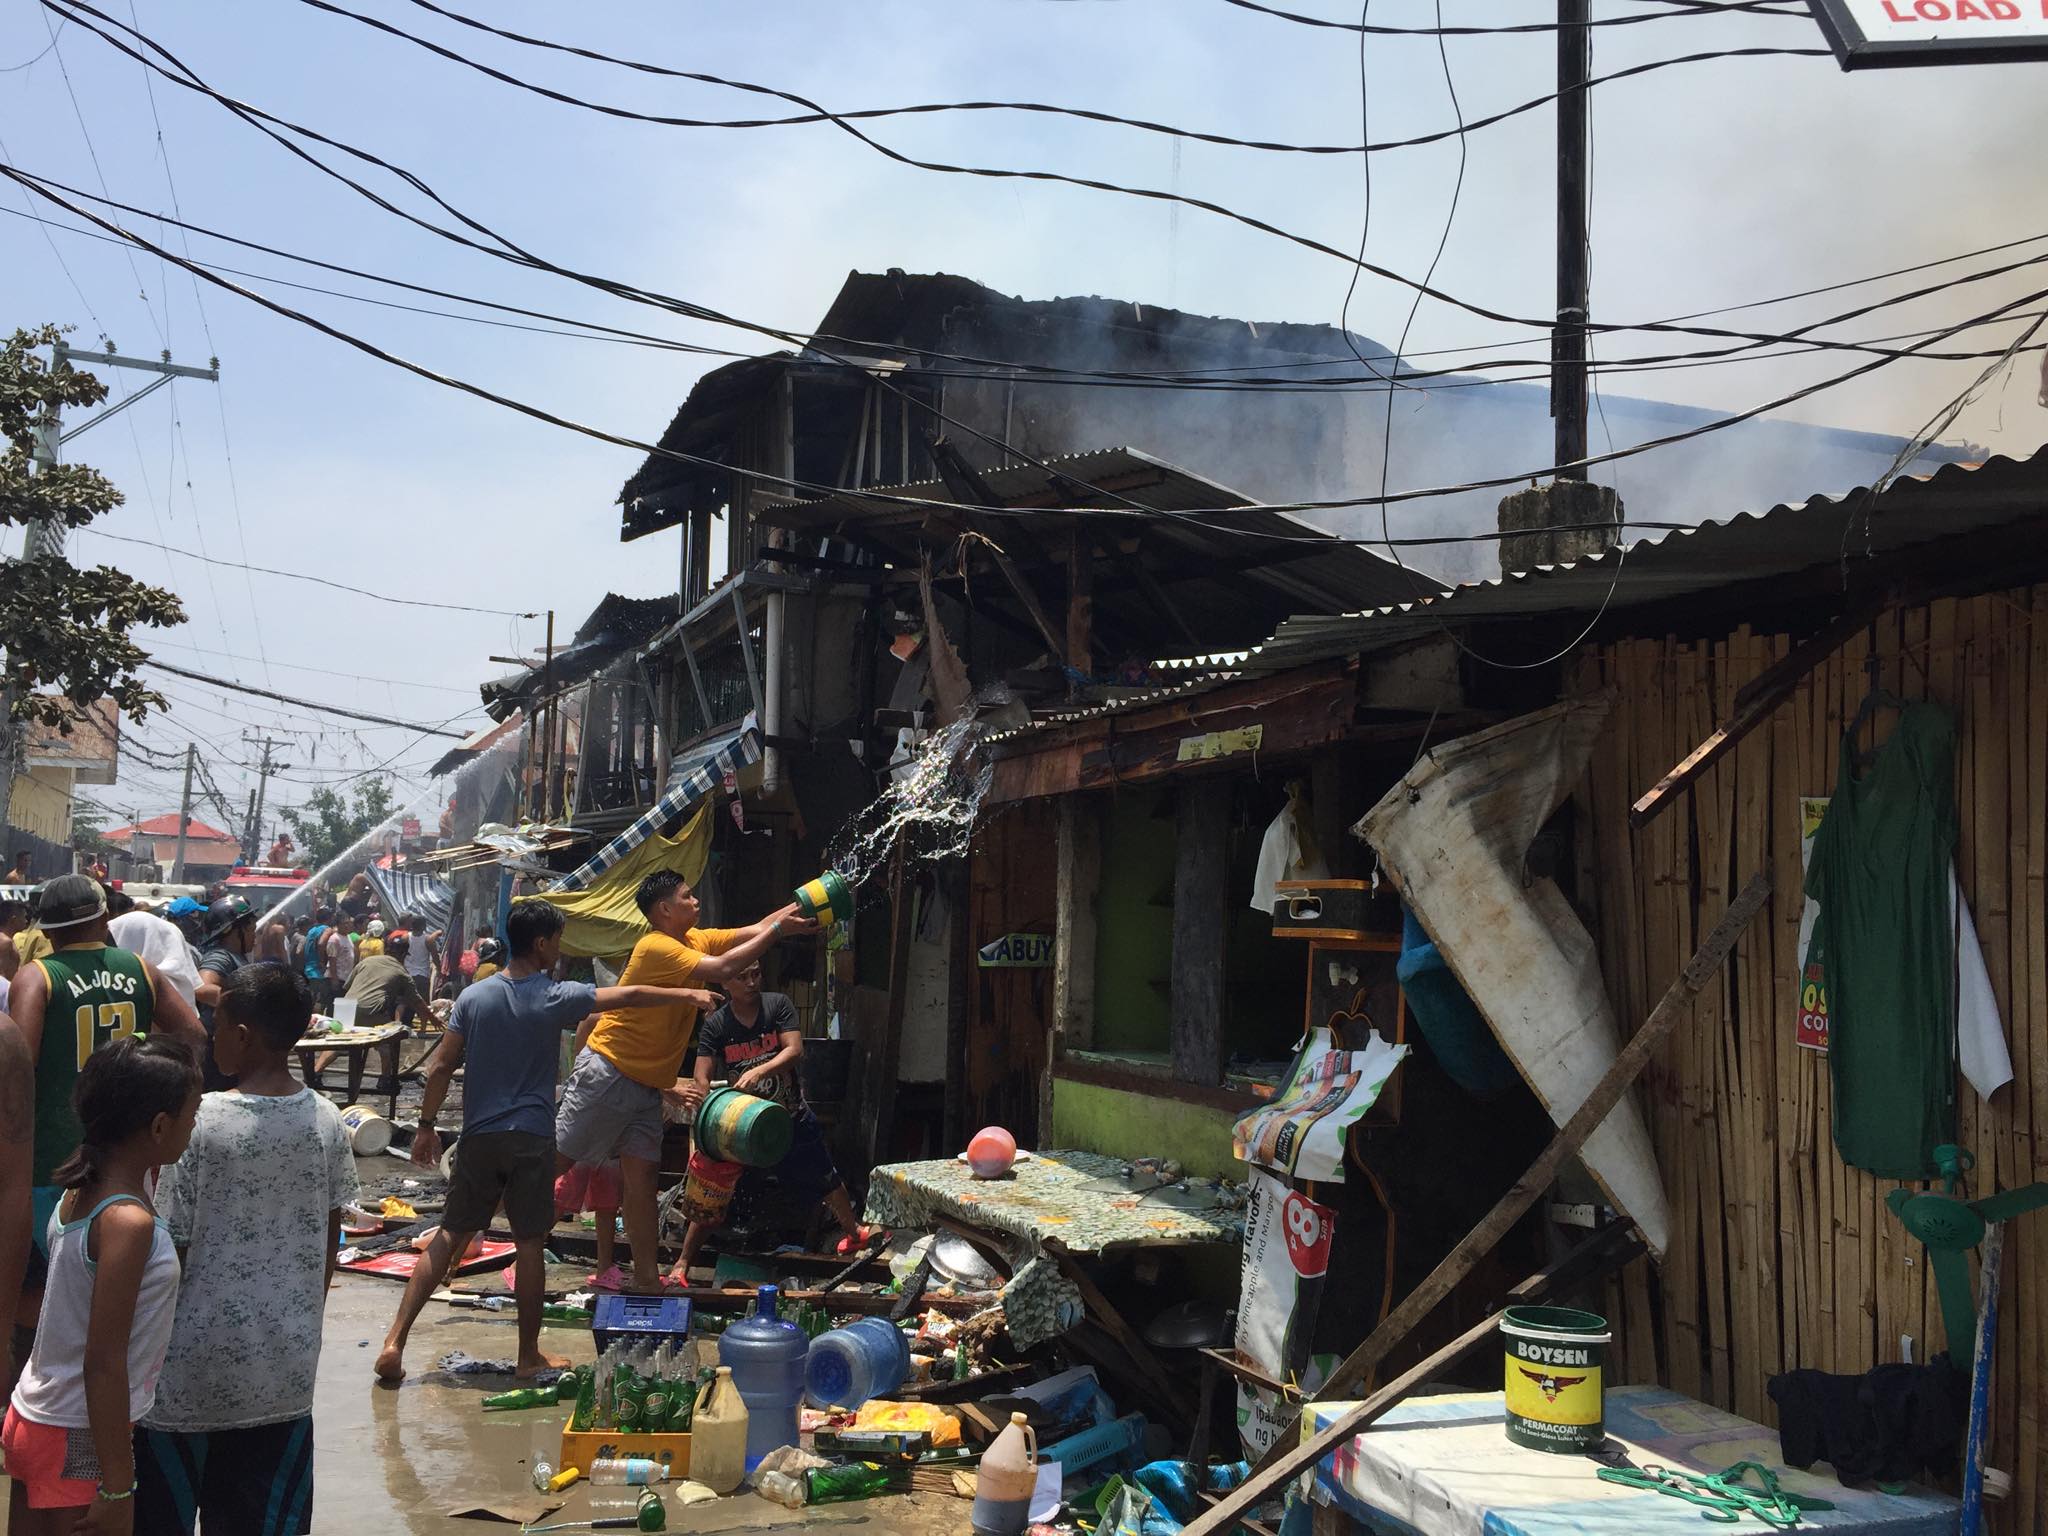 Scenes from the fire in Alaska Barangay Mambaling, Cebu City | Cebu ...